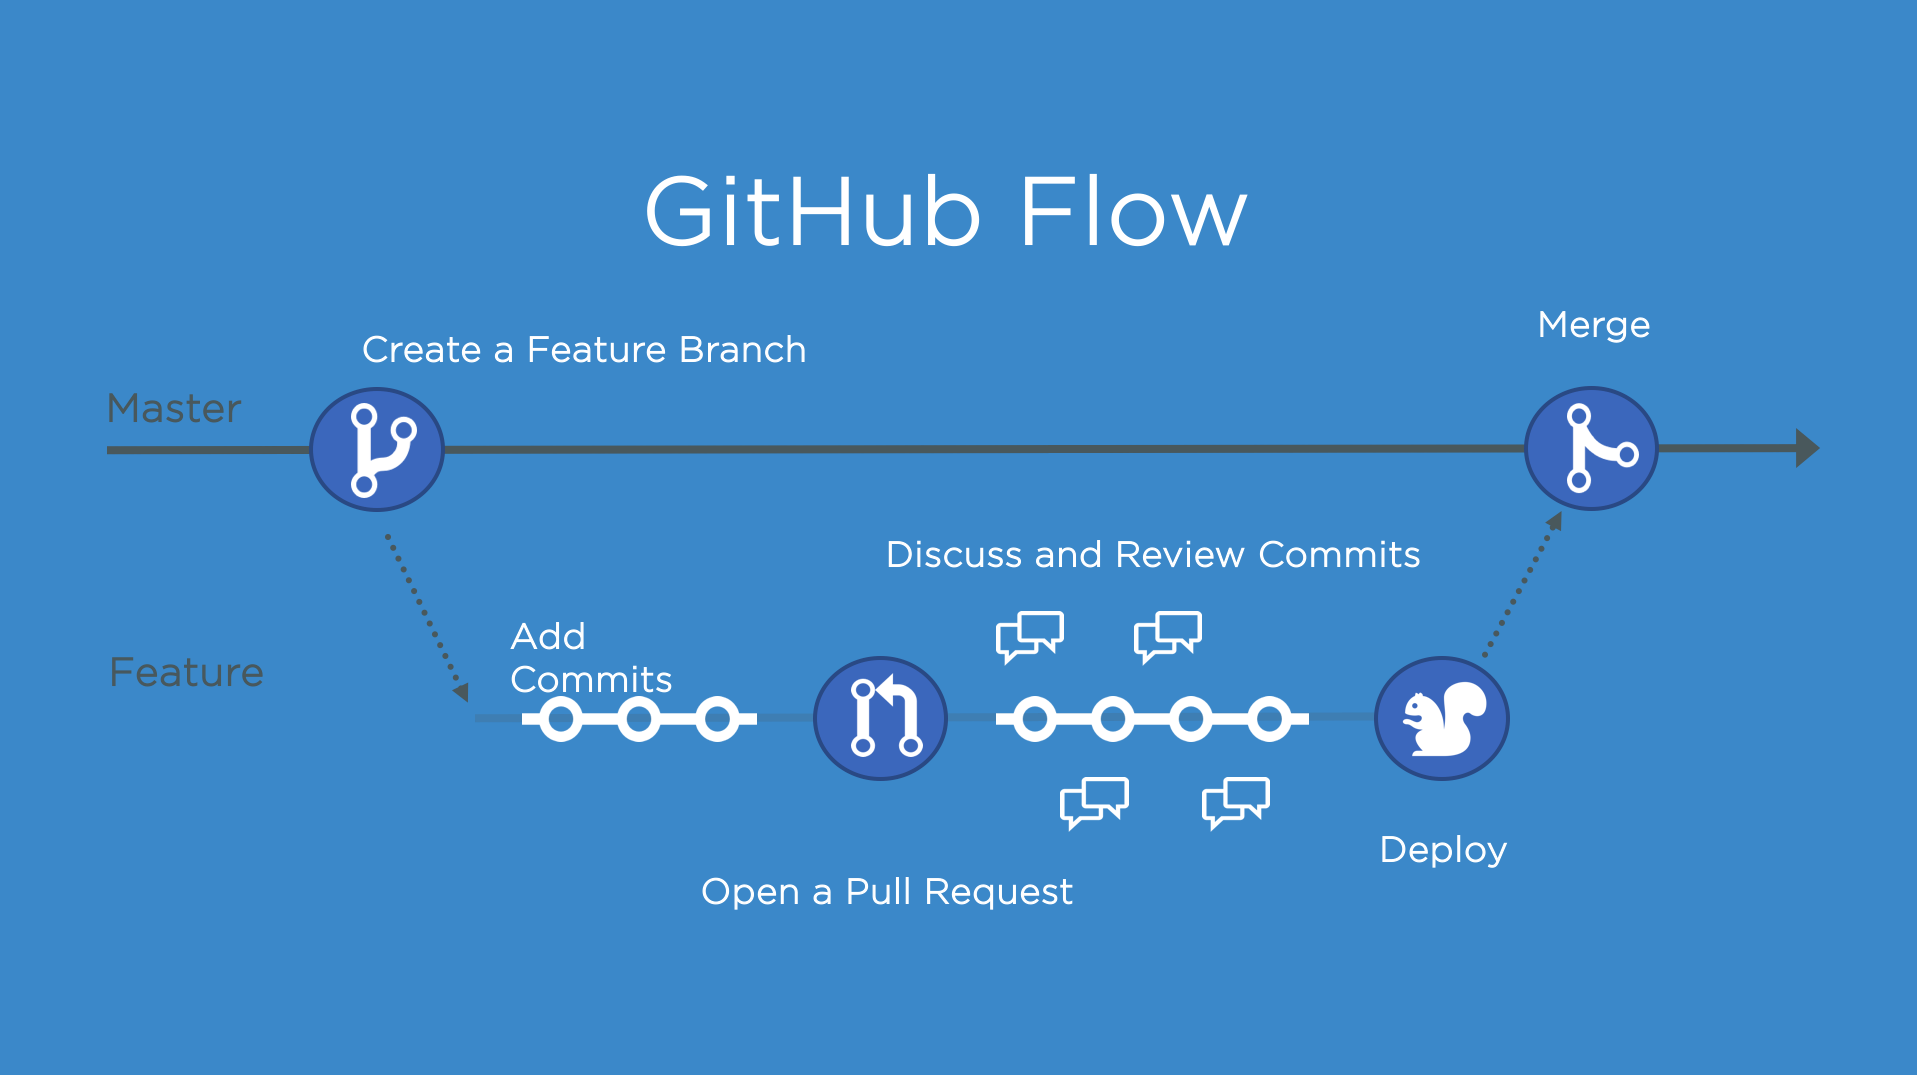 The GitHub Flow